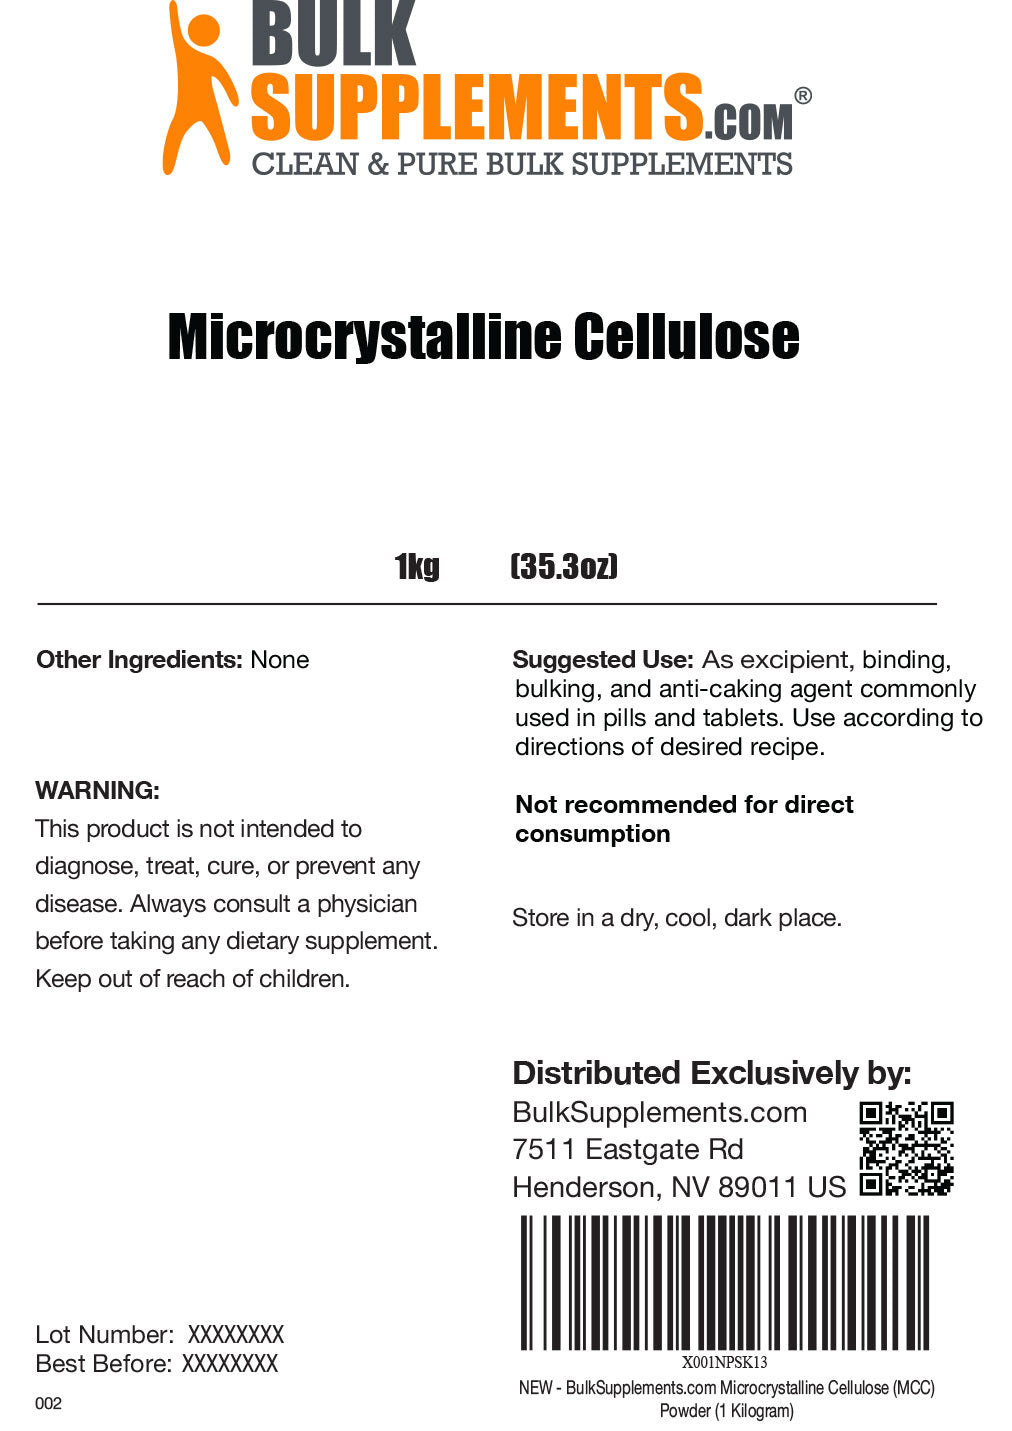 Microcrystalline Cellulose powder label 1kg